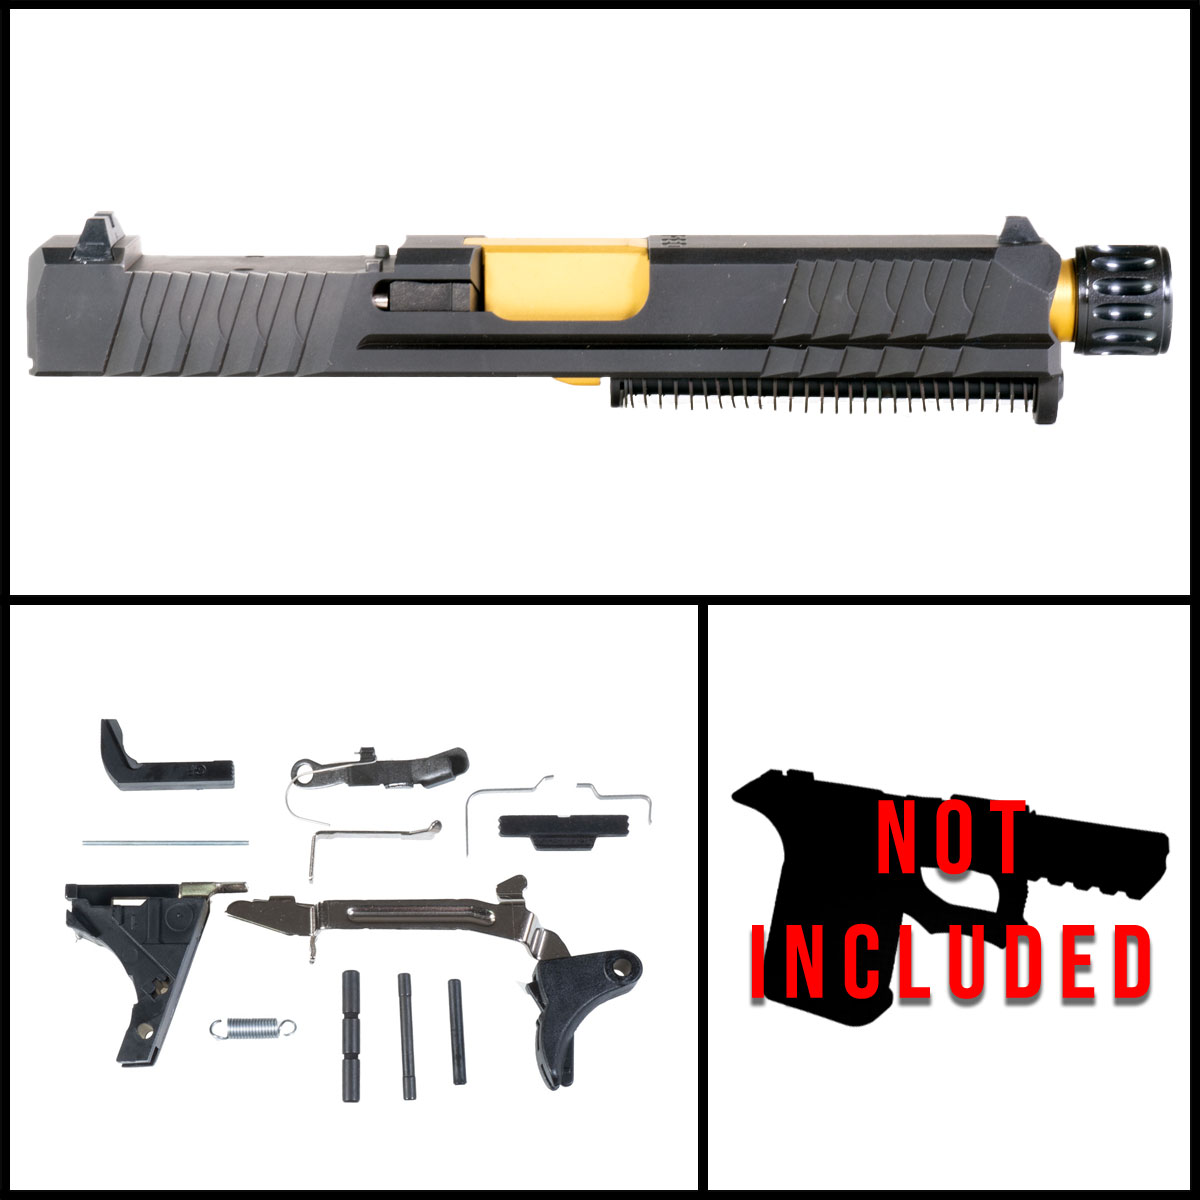 DDS 'Esplosione' 9mm Full Pistol Build Kit (Everything Minus Frame) - Glock 19 Gen 1-3 Compatible